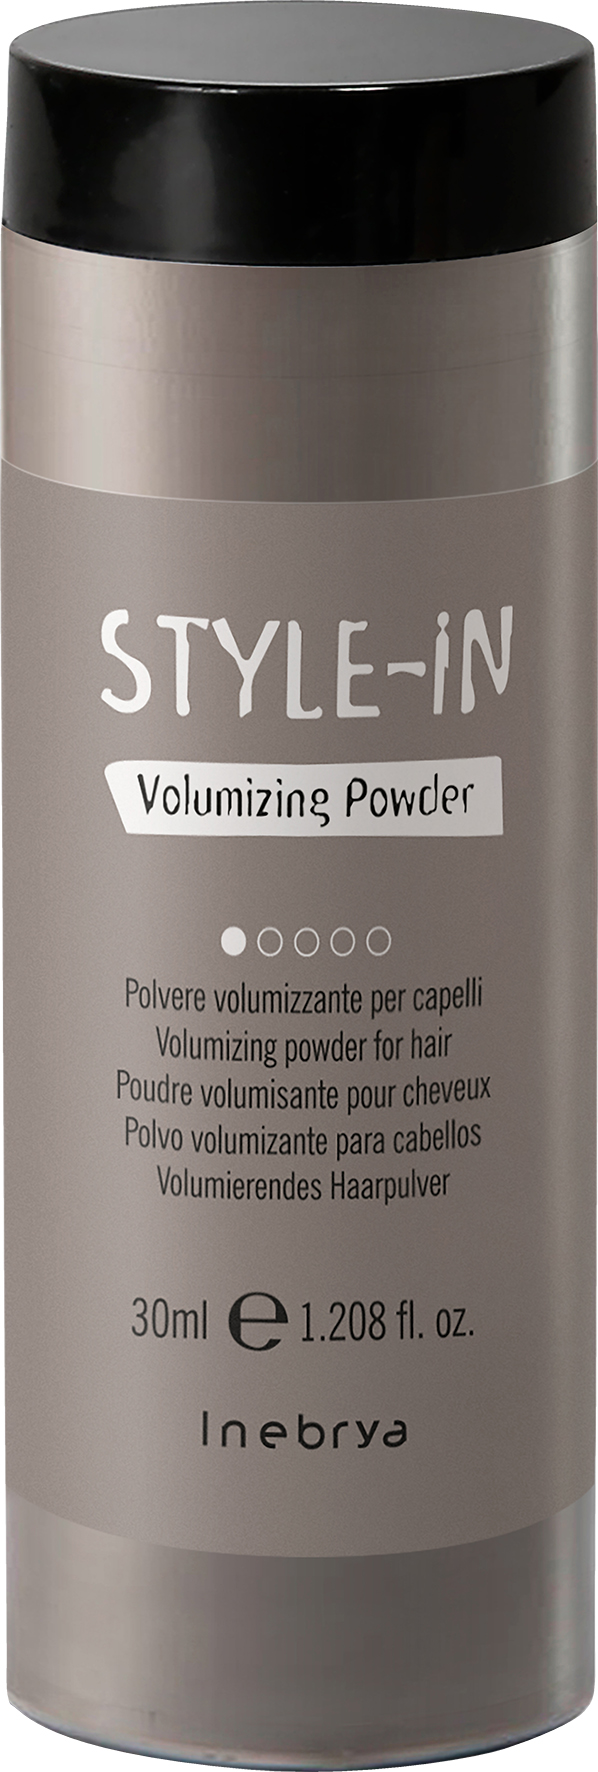 Style in Volumizing Powder, 30 ml